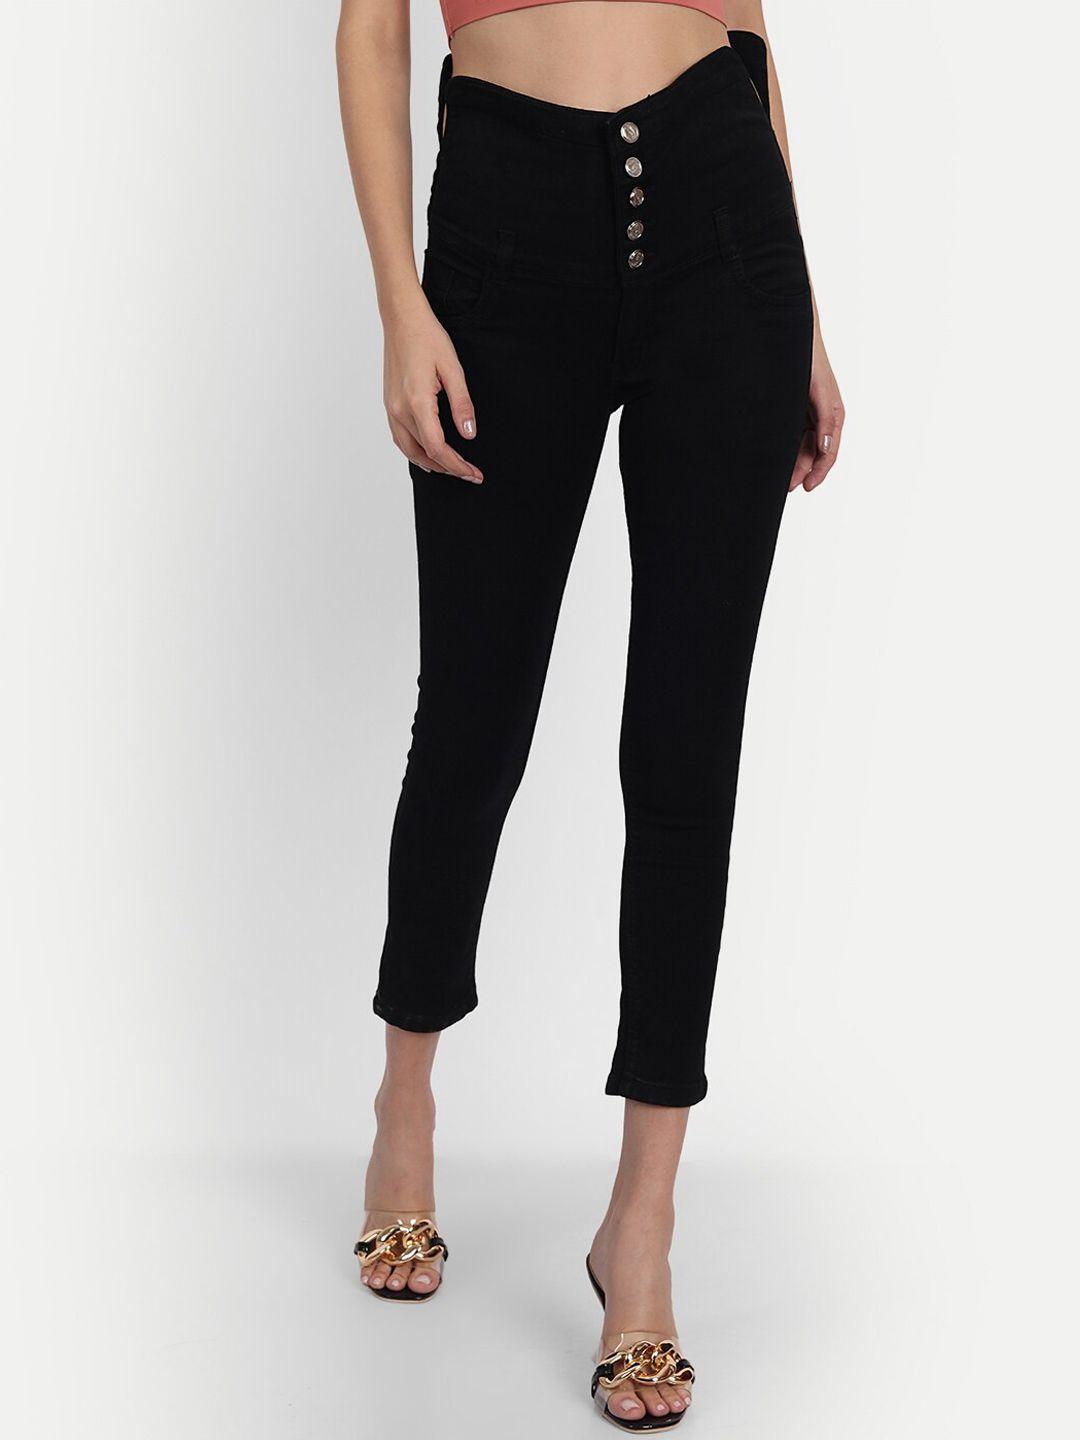 broadstar women black jean skinny fit high-rise stretchable jeans